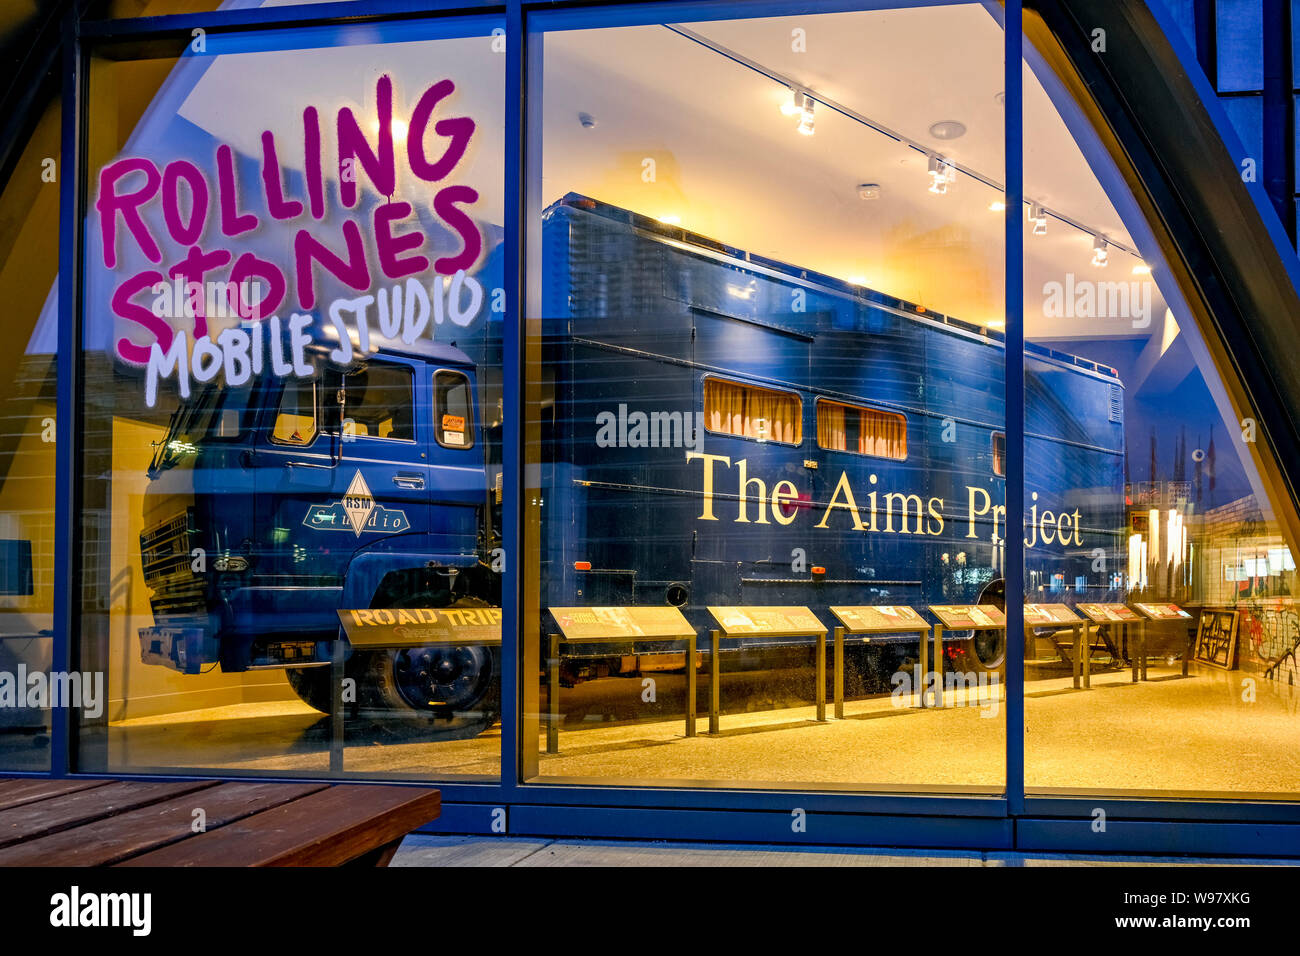 Rolling Stones Mobile Studio, National Music Centre, Calgary,  Alberta, Canada Stock Photo